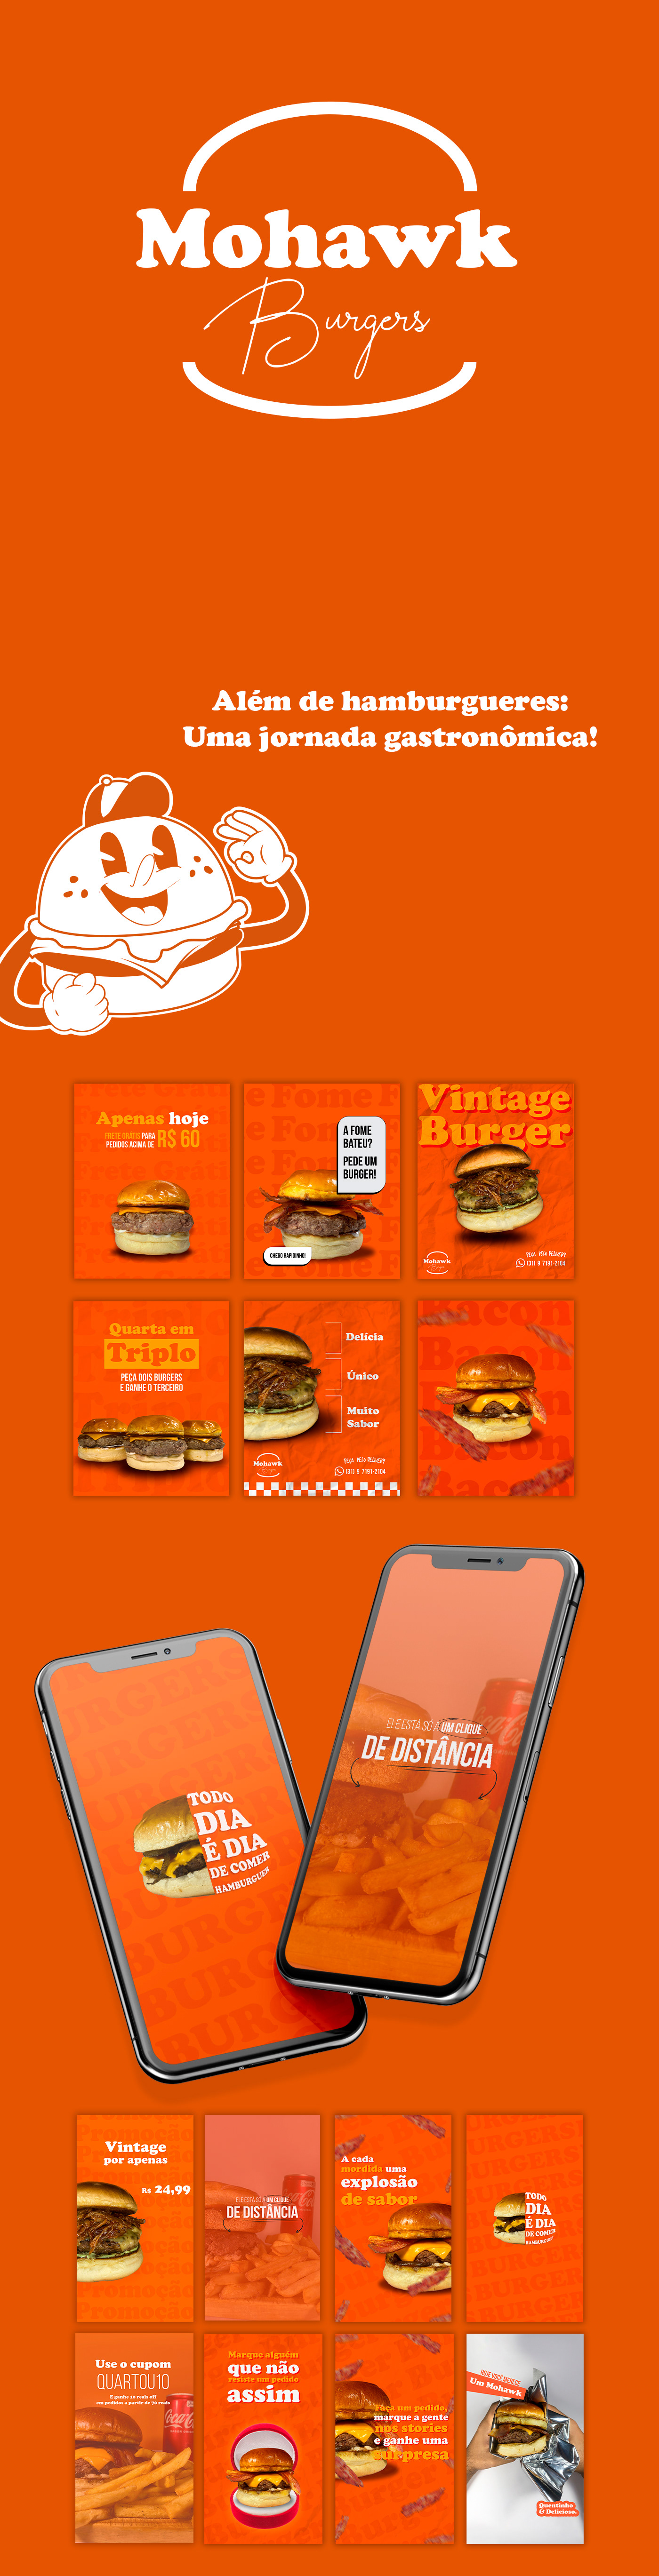 hamburguer burger identity visual identity identidade visual Burgers restaurant brand identity Logo Design Graphic Designer